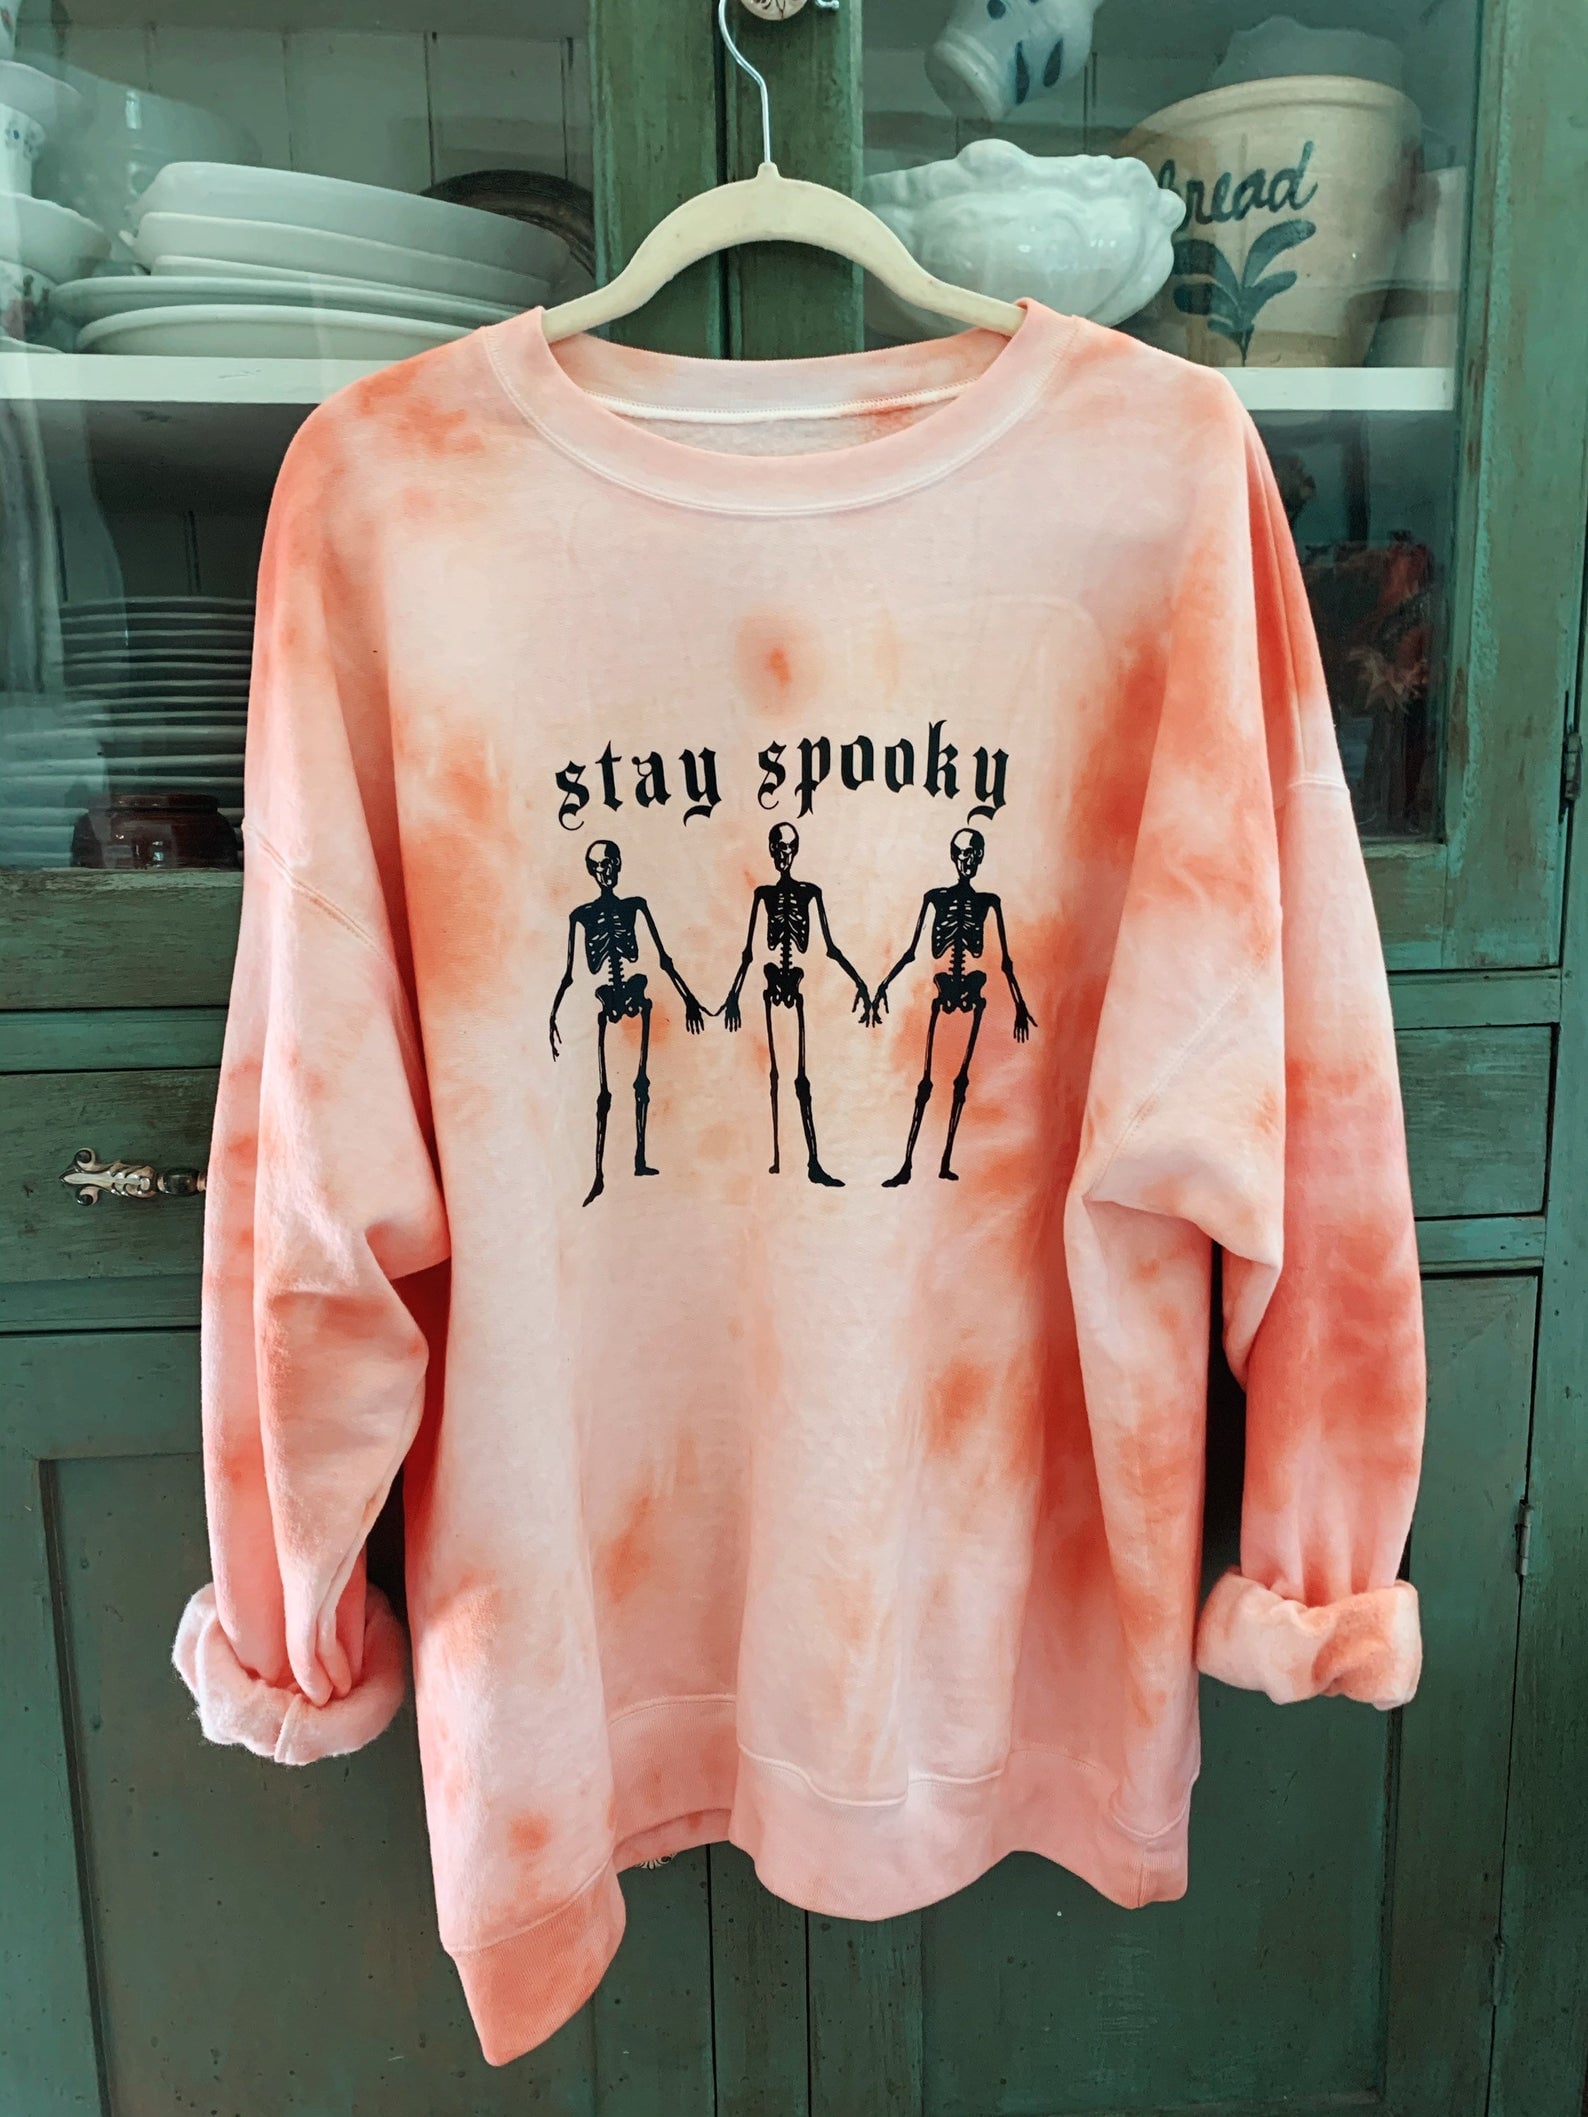 Spooky Season Sweatshirt Fall & Halloween Crew Neck Sweater